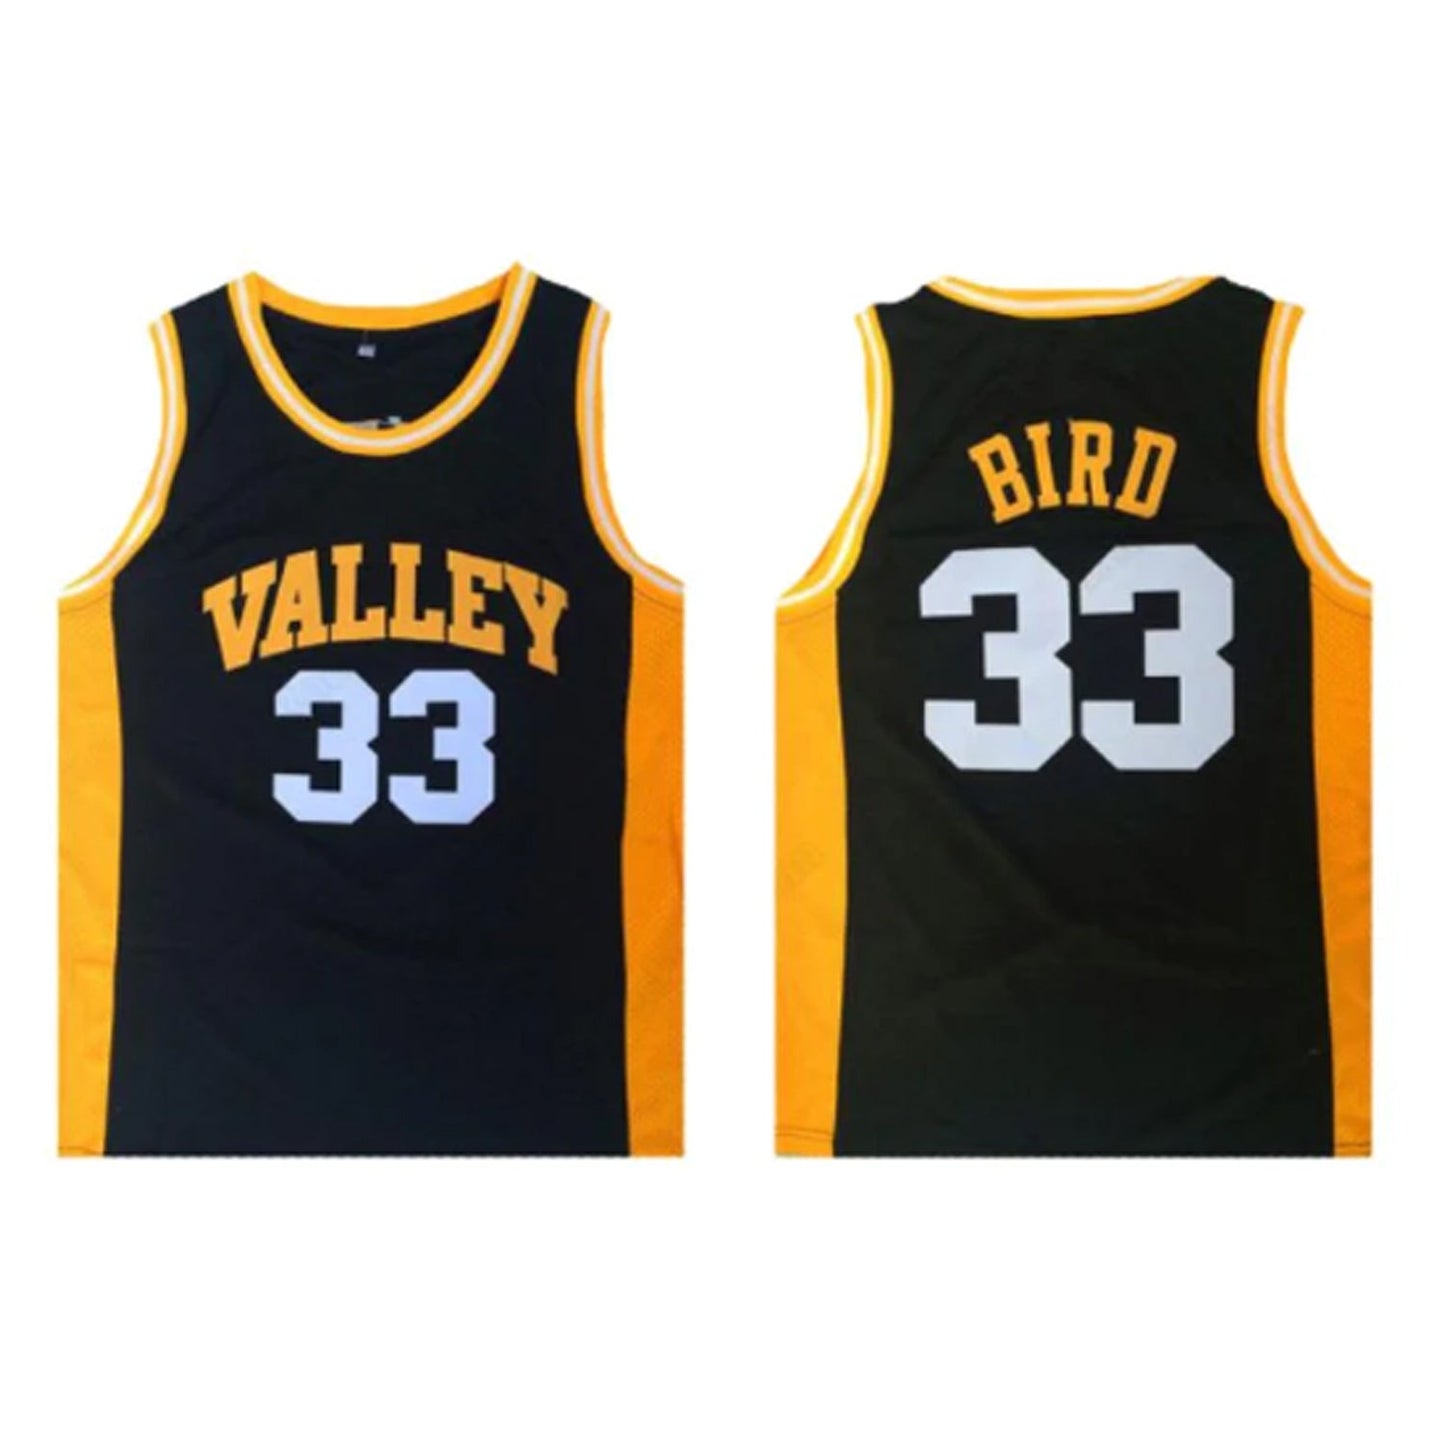 Larry Bird Valley High School 33 Jersey